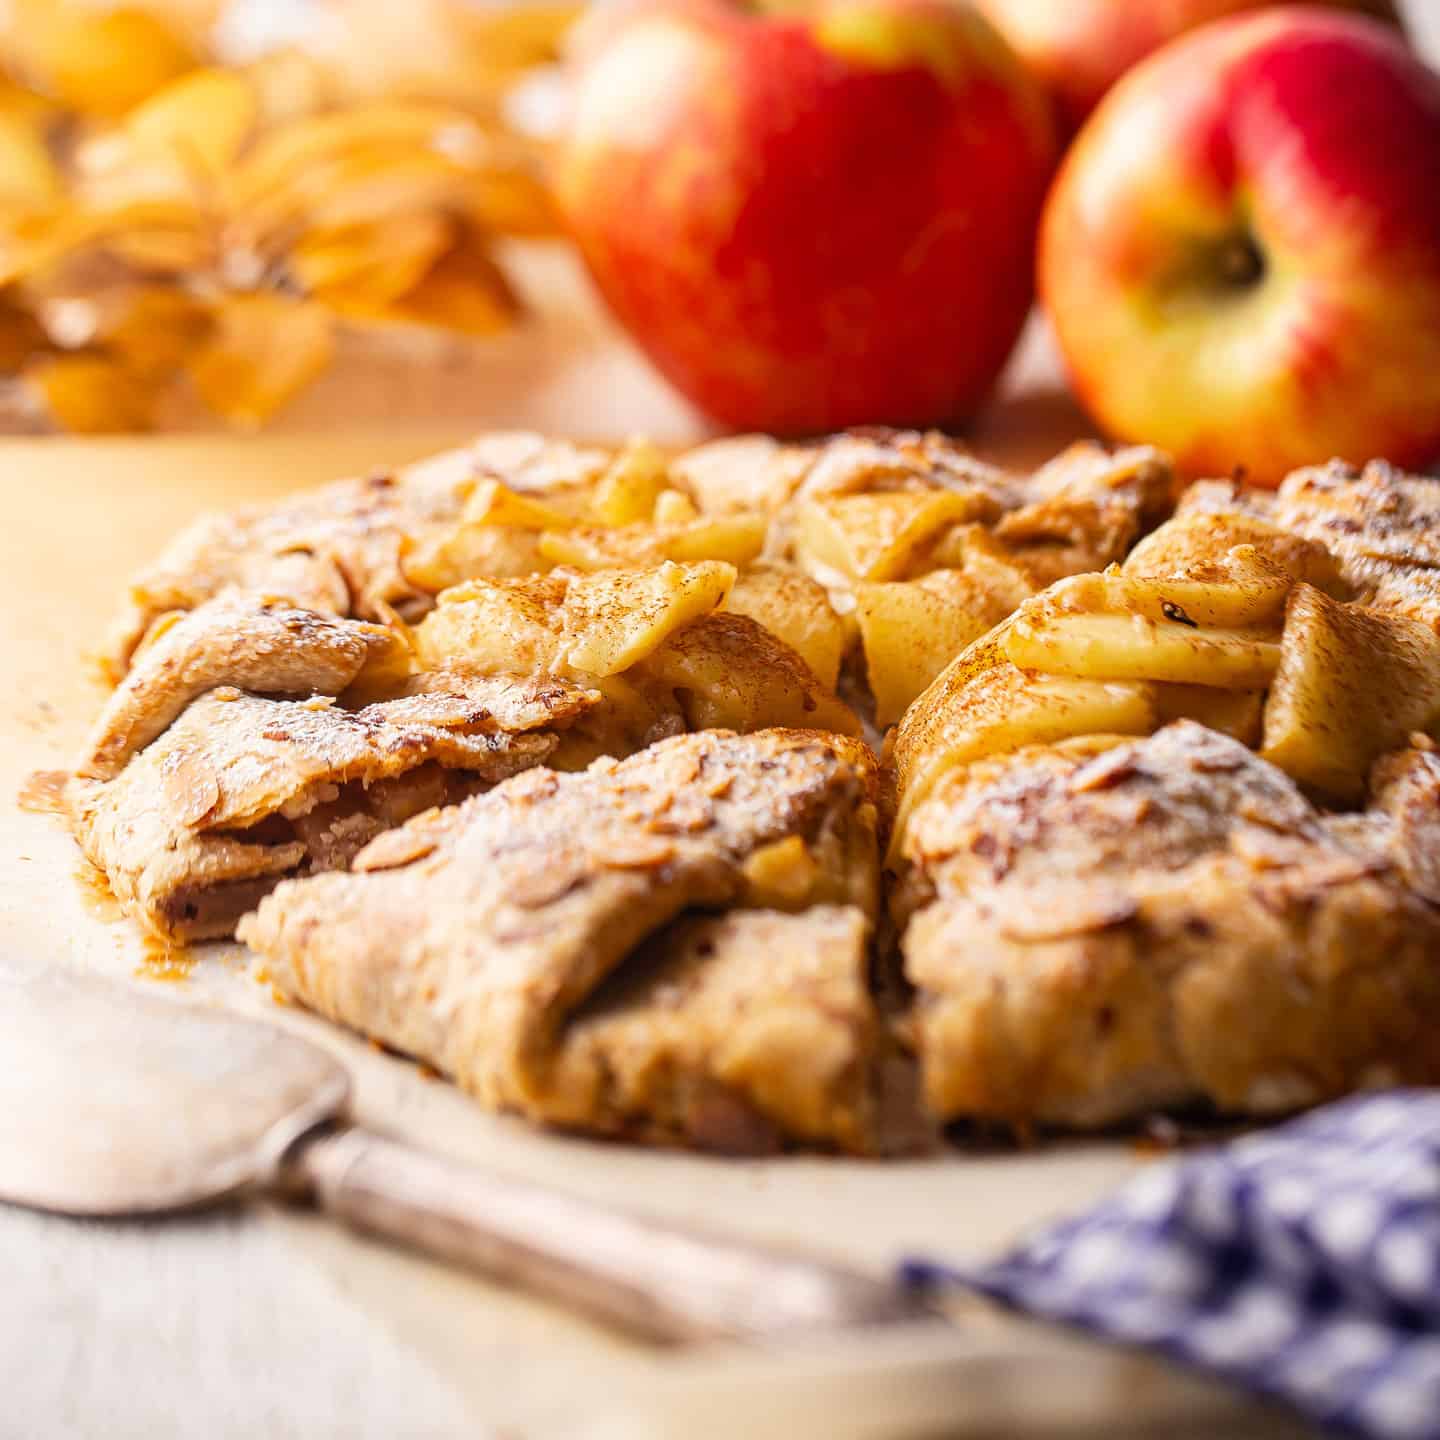 Easy as Pie; Baking a Galette – Making It!